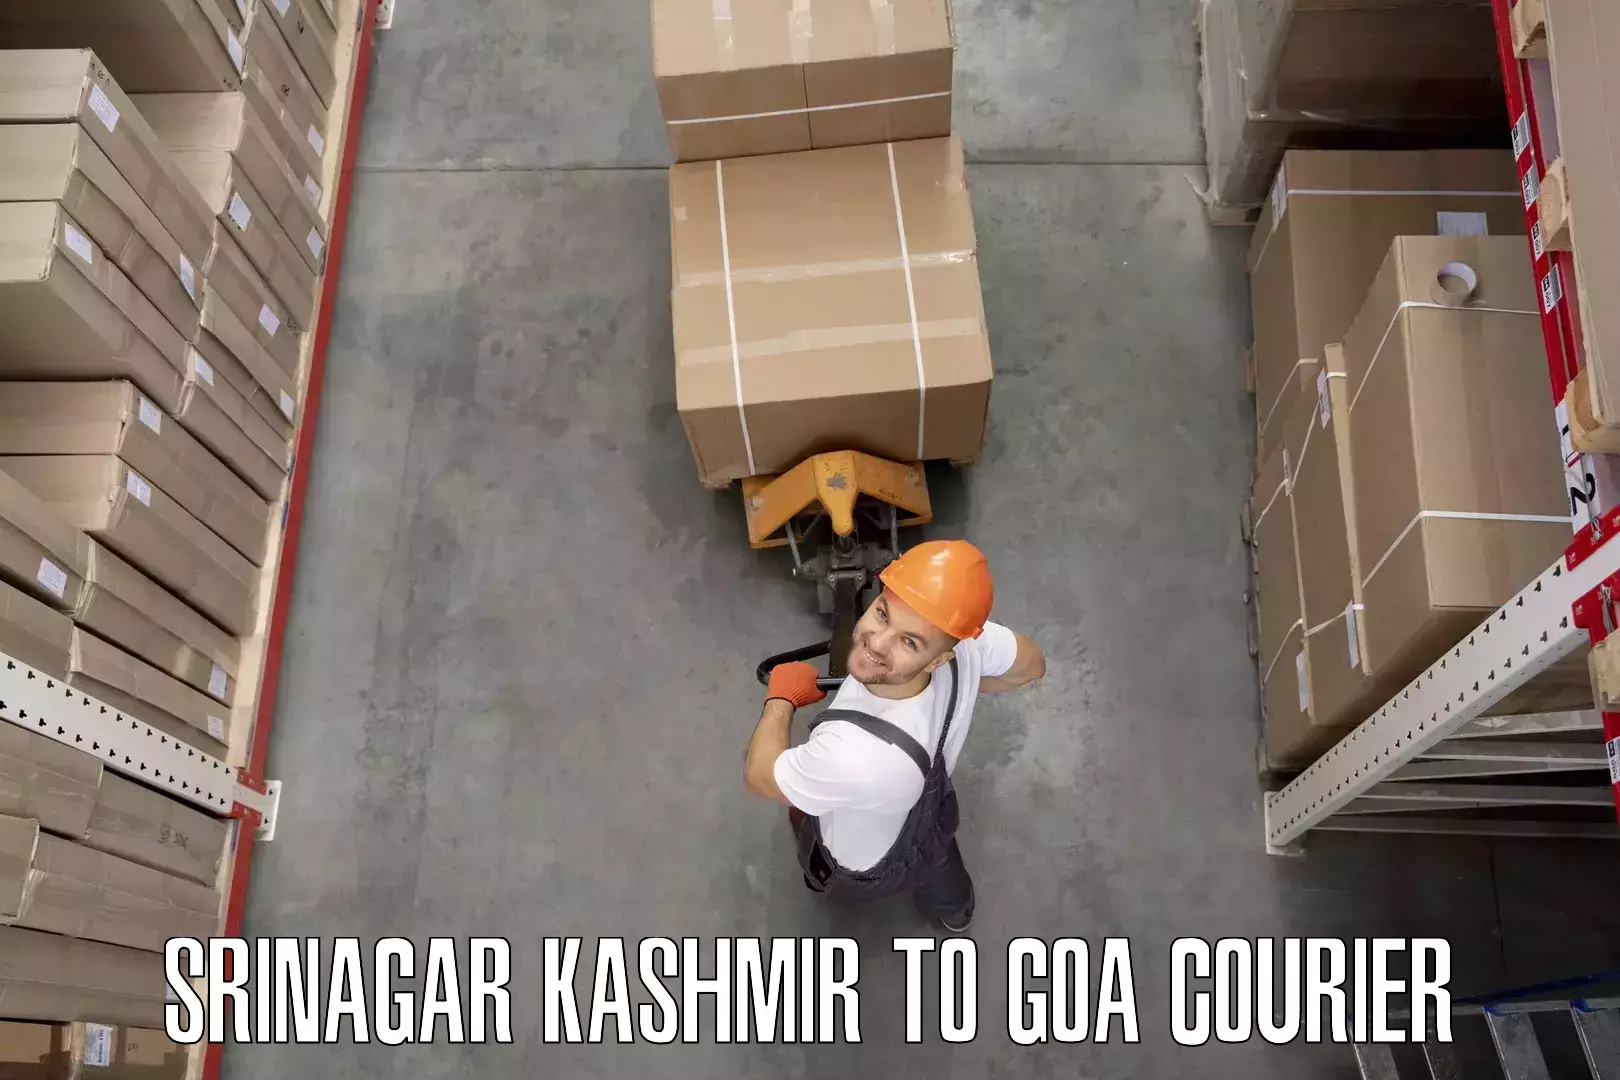 Quality moving company Srinagar Kashmir to Goa